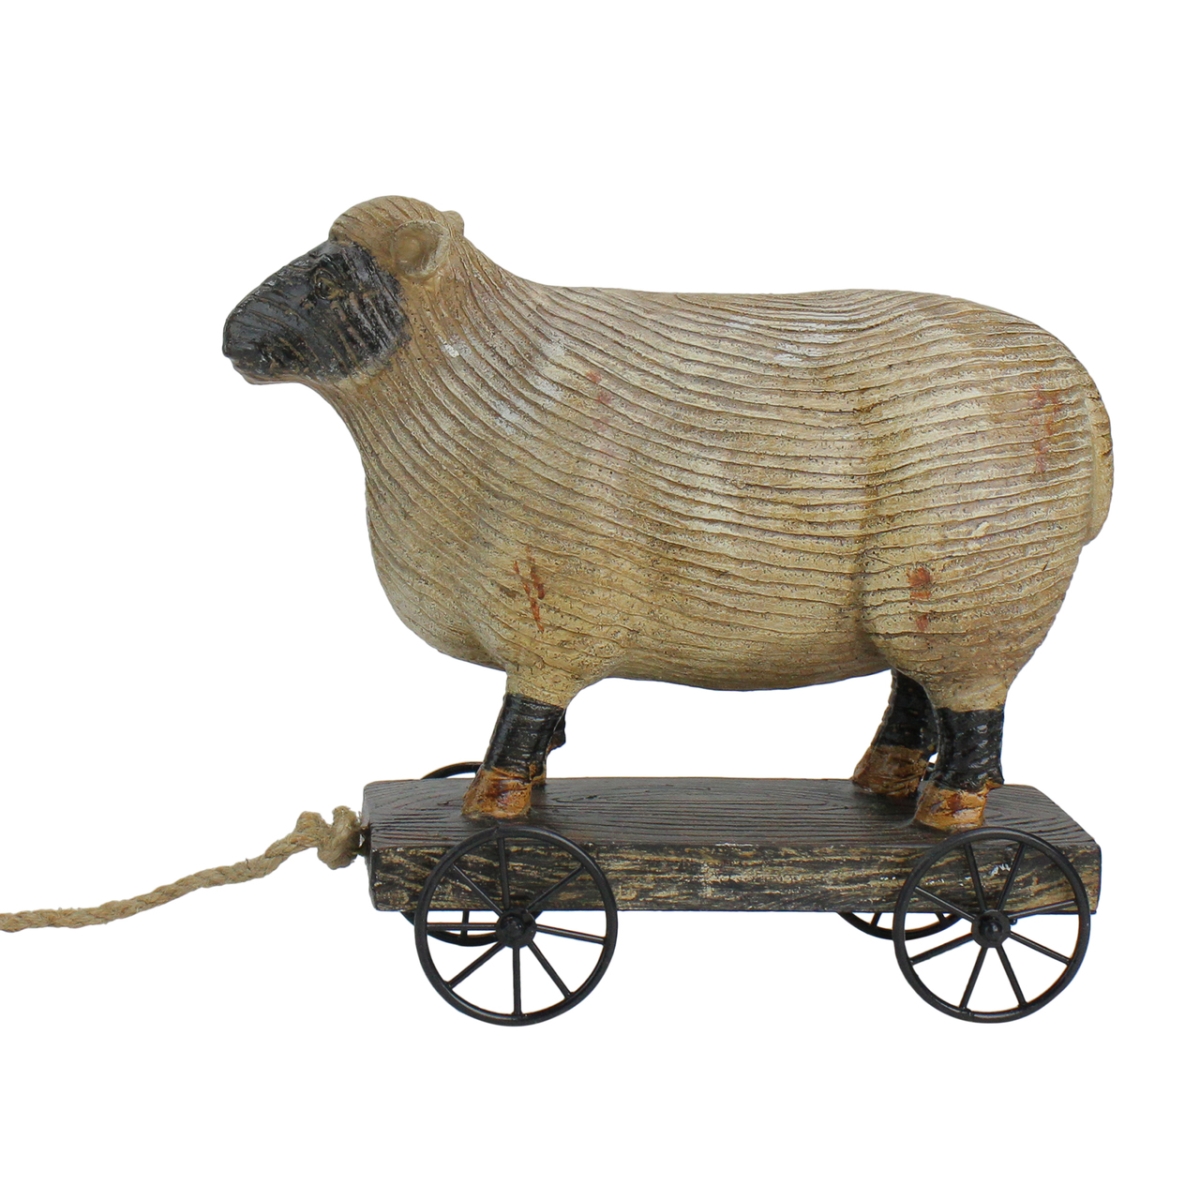 33377632 10 In. Black & White Wood Textured Sheep On Cart Outdoor Garden Statue